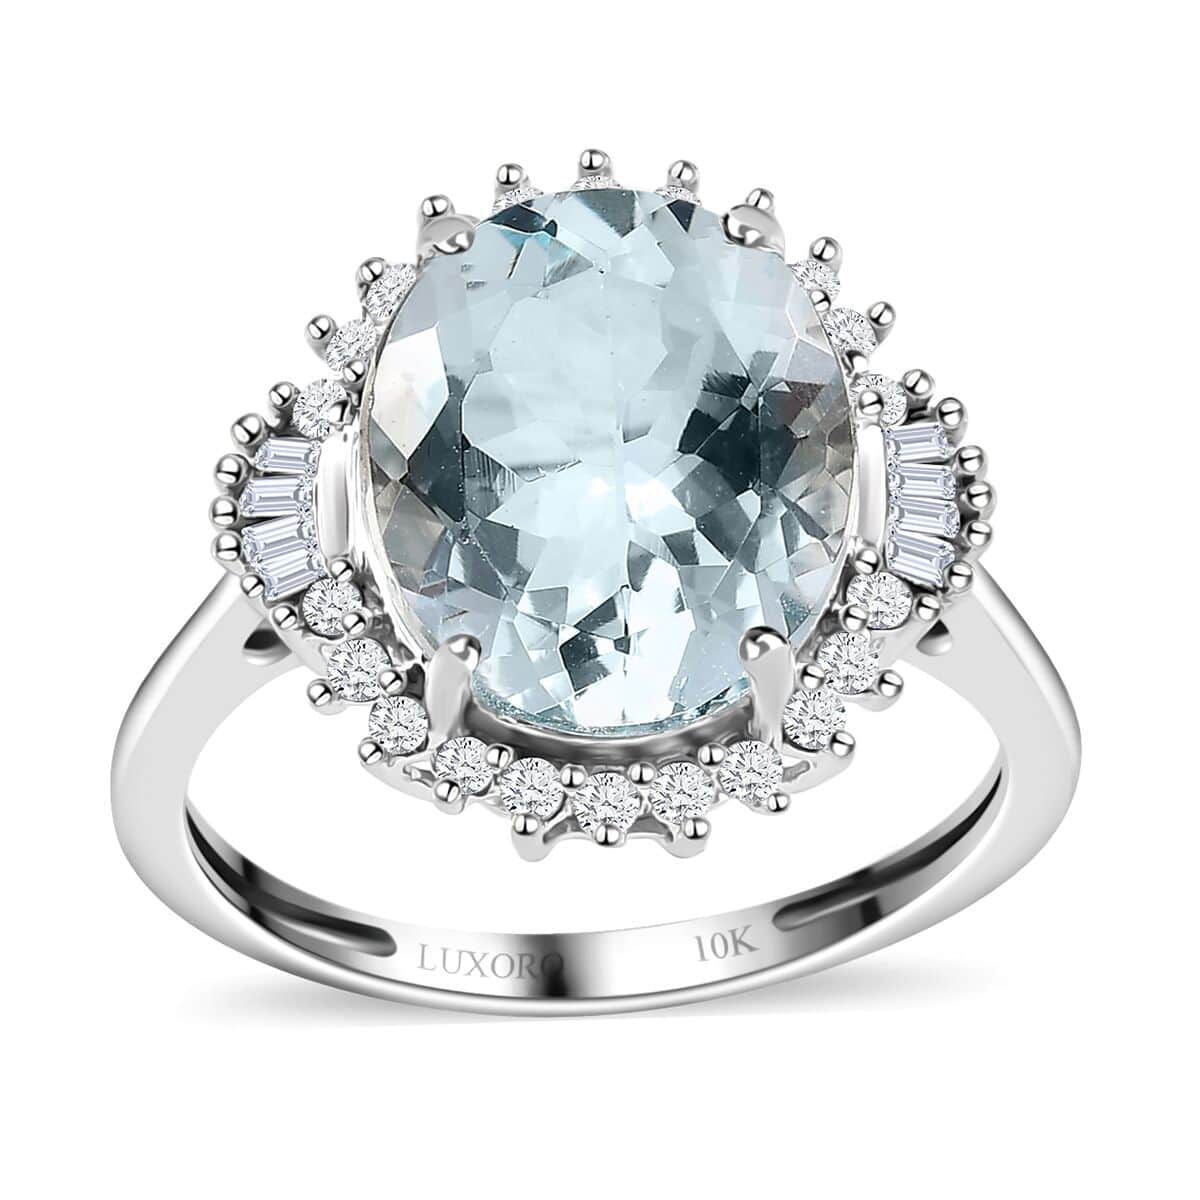 Luxoro 10K White Gold Premium Mangoro Aquamarine and Diamond Halo Ring (Size 9.0) 4.40 ctw image number 0